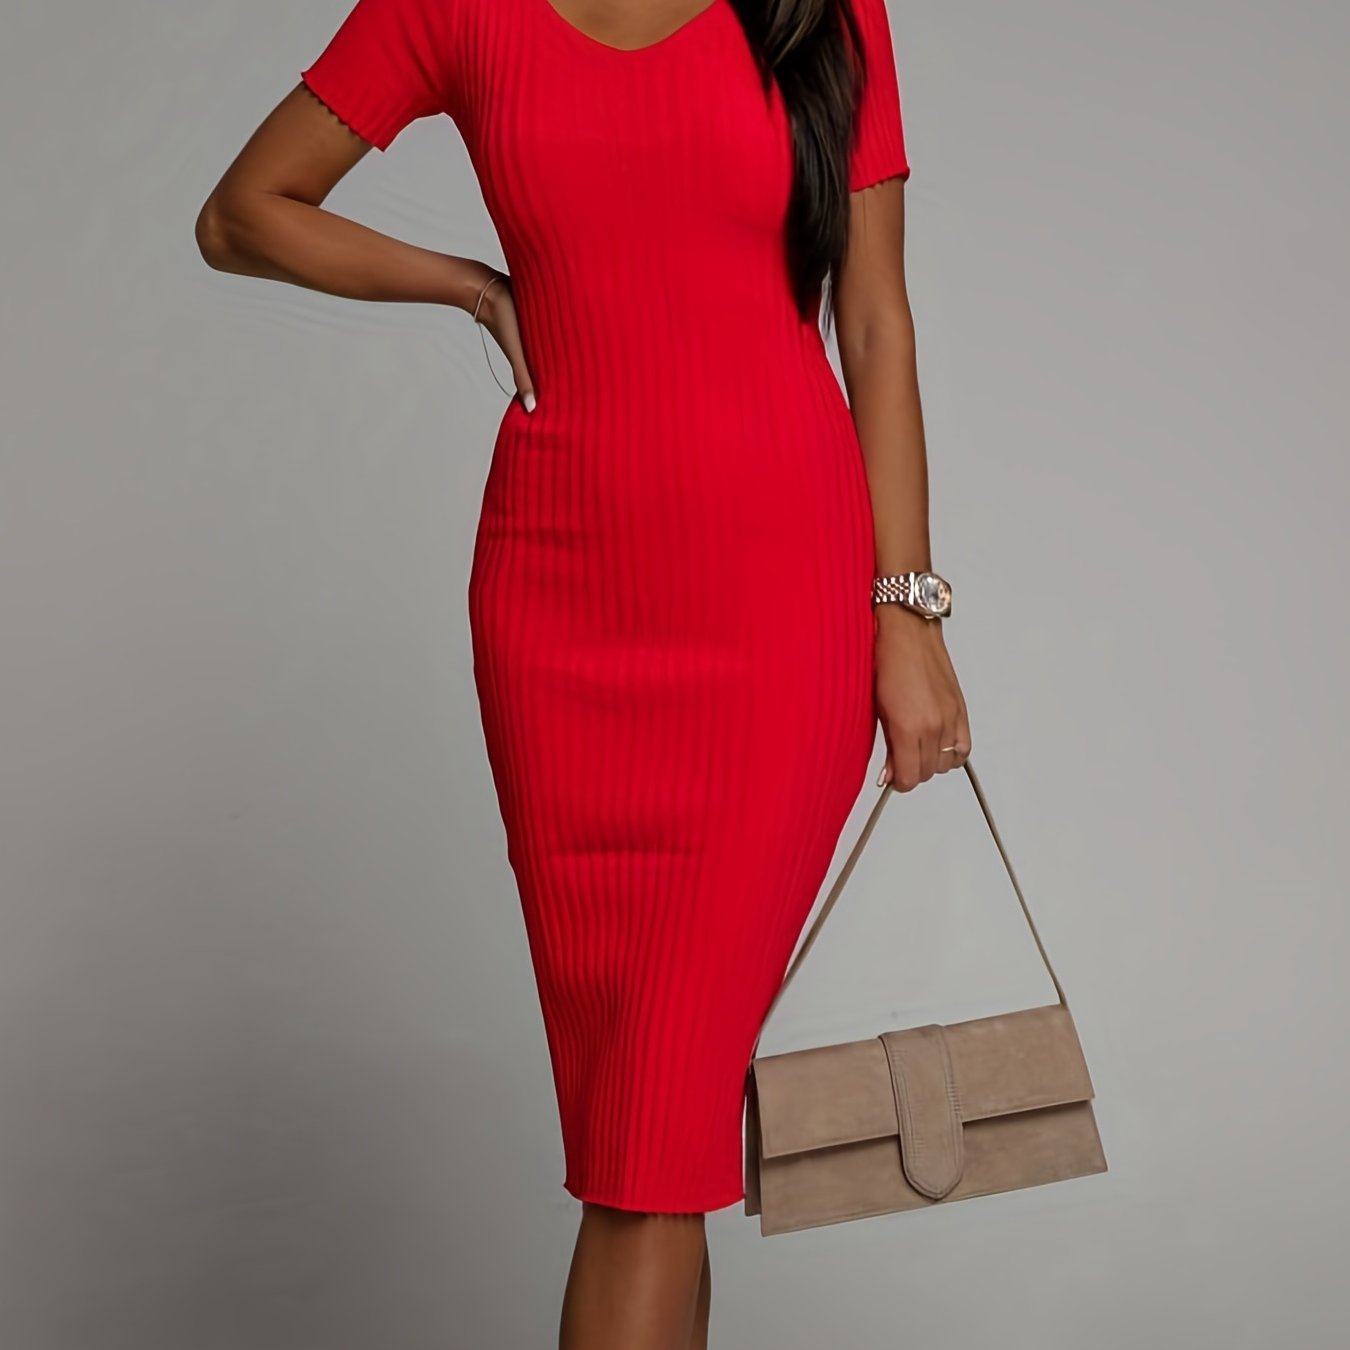 Antmvs Solid Ribbed Dress, Elegant V Neck Short Sleeve Slim Dress, Women's Clothing